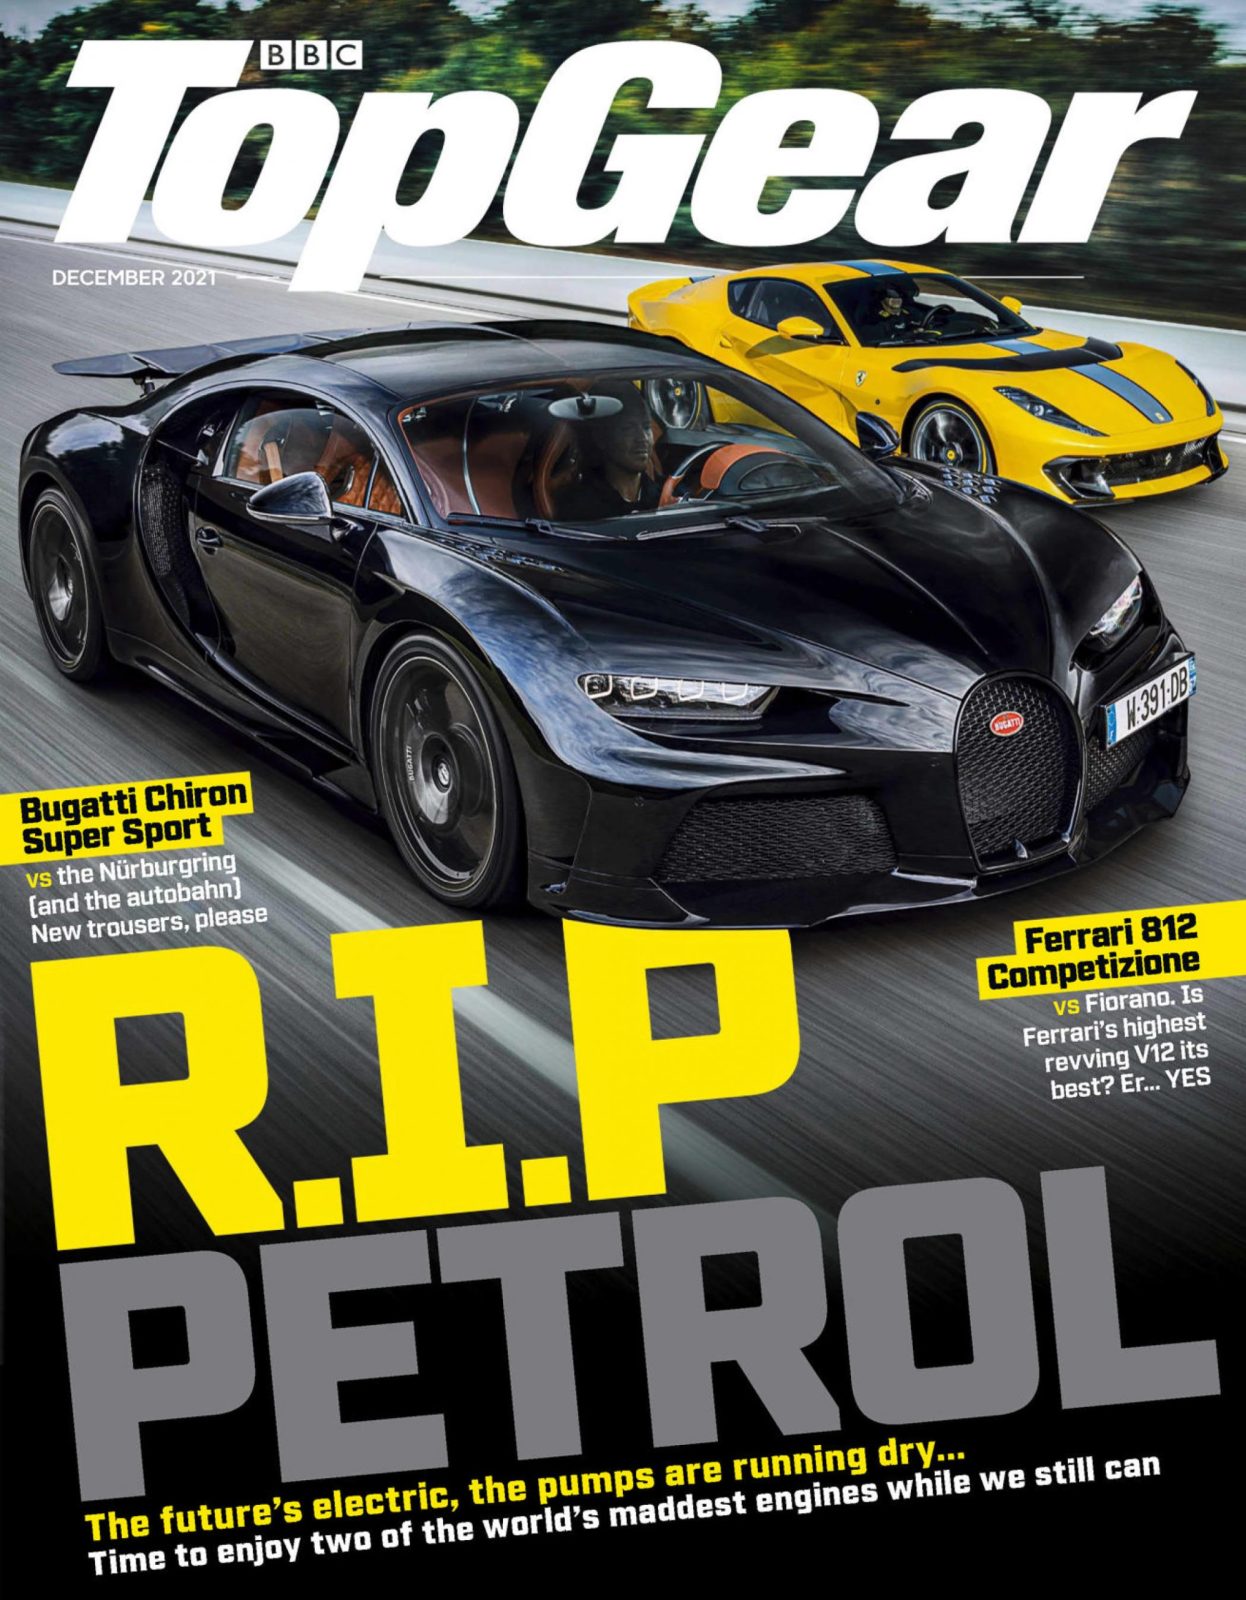 BBC Top Gear BBC疯狂汽车秀杂志  DECEMBER 2021年12月刊